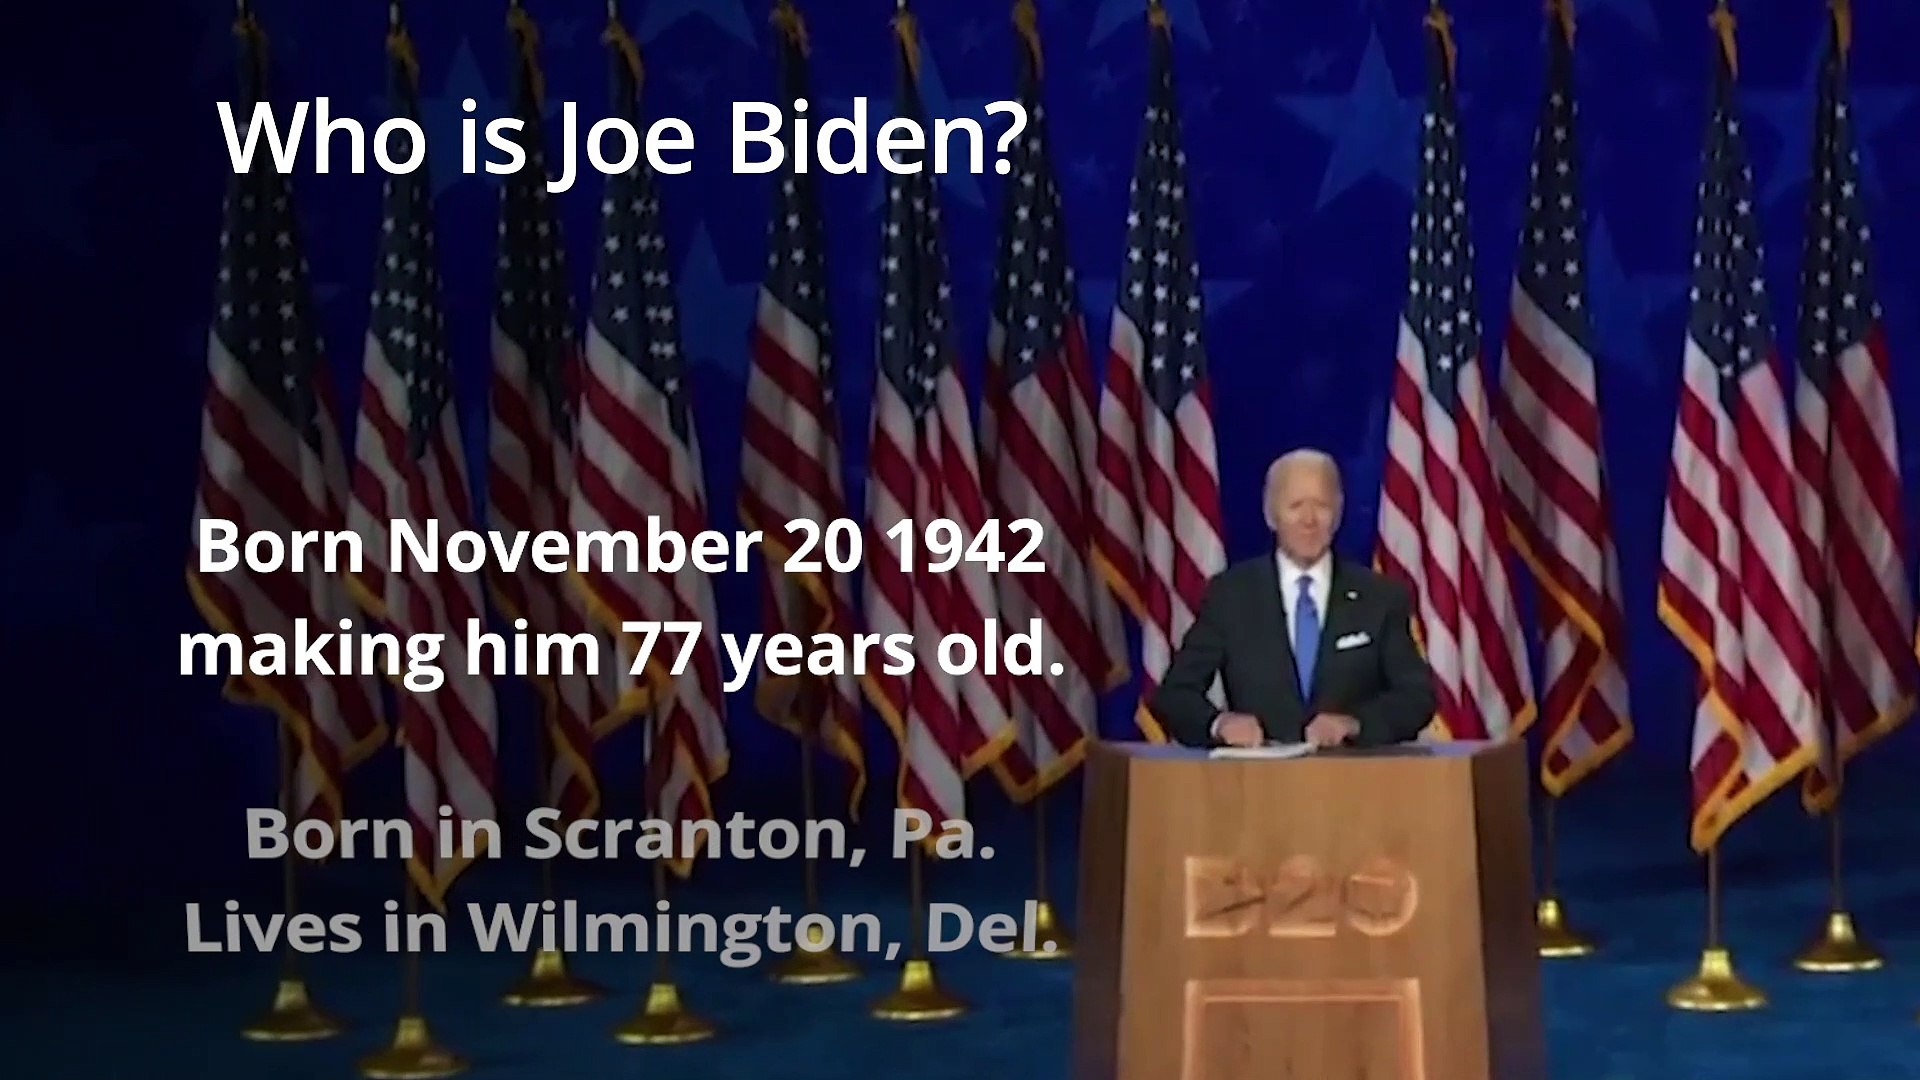 Joe Biden in profile